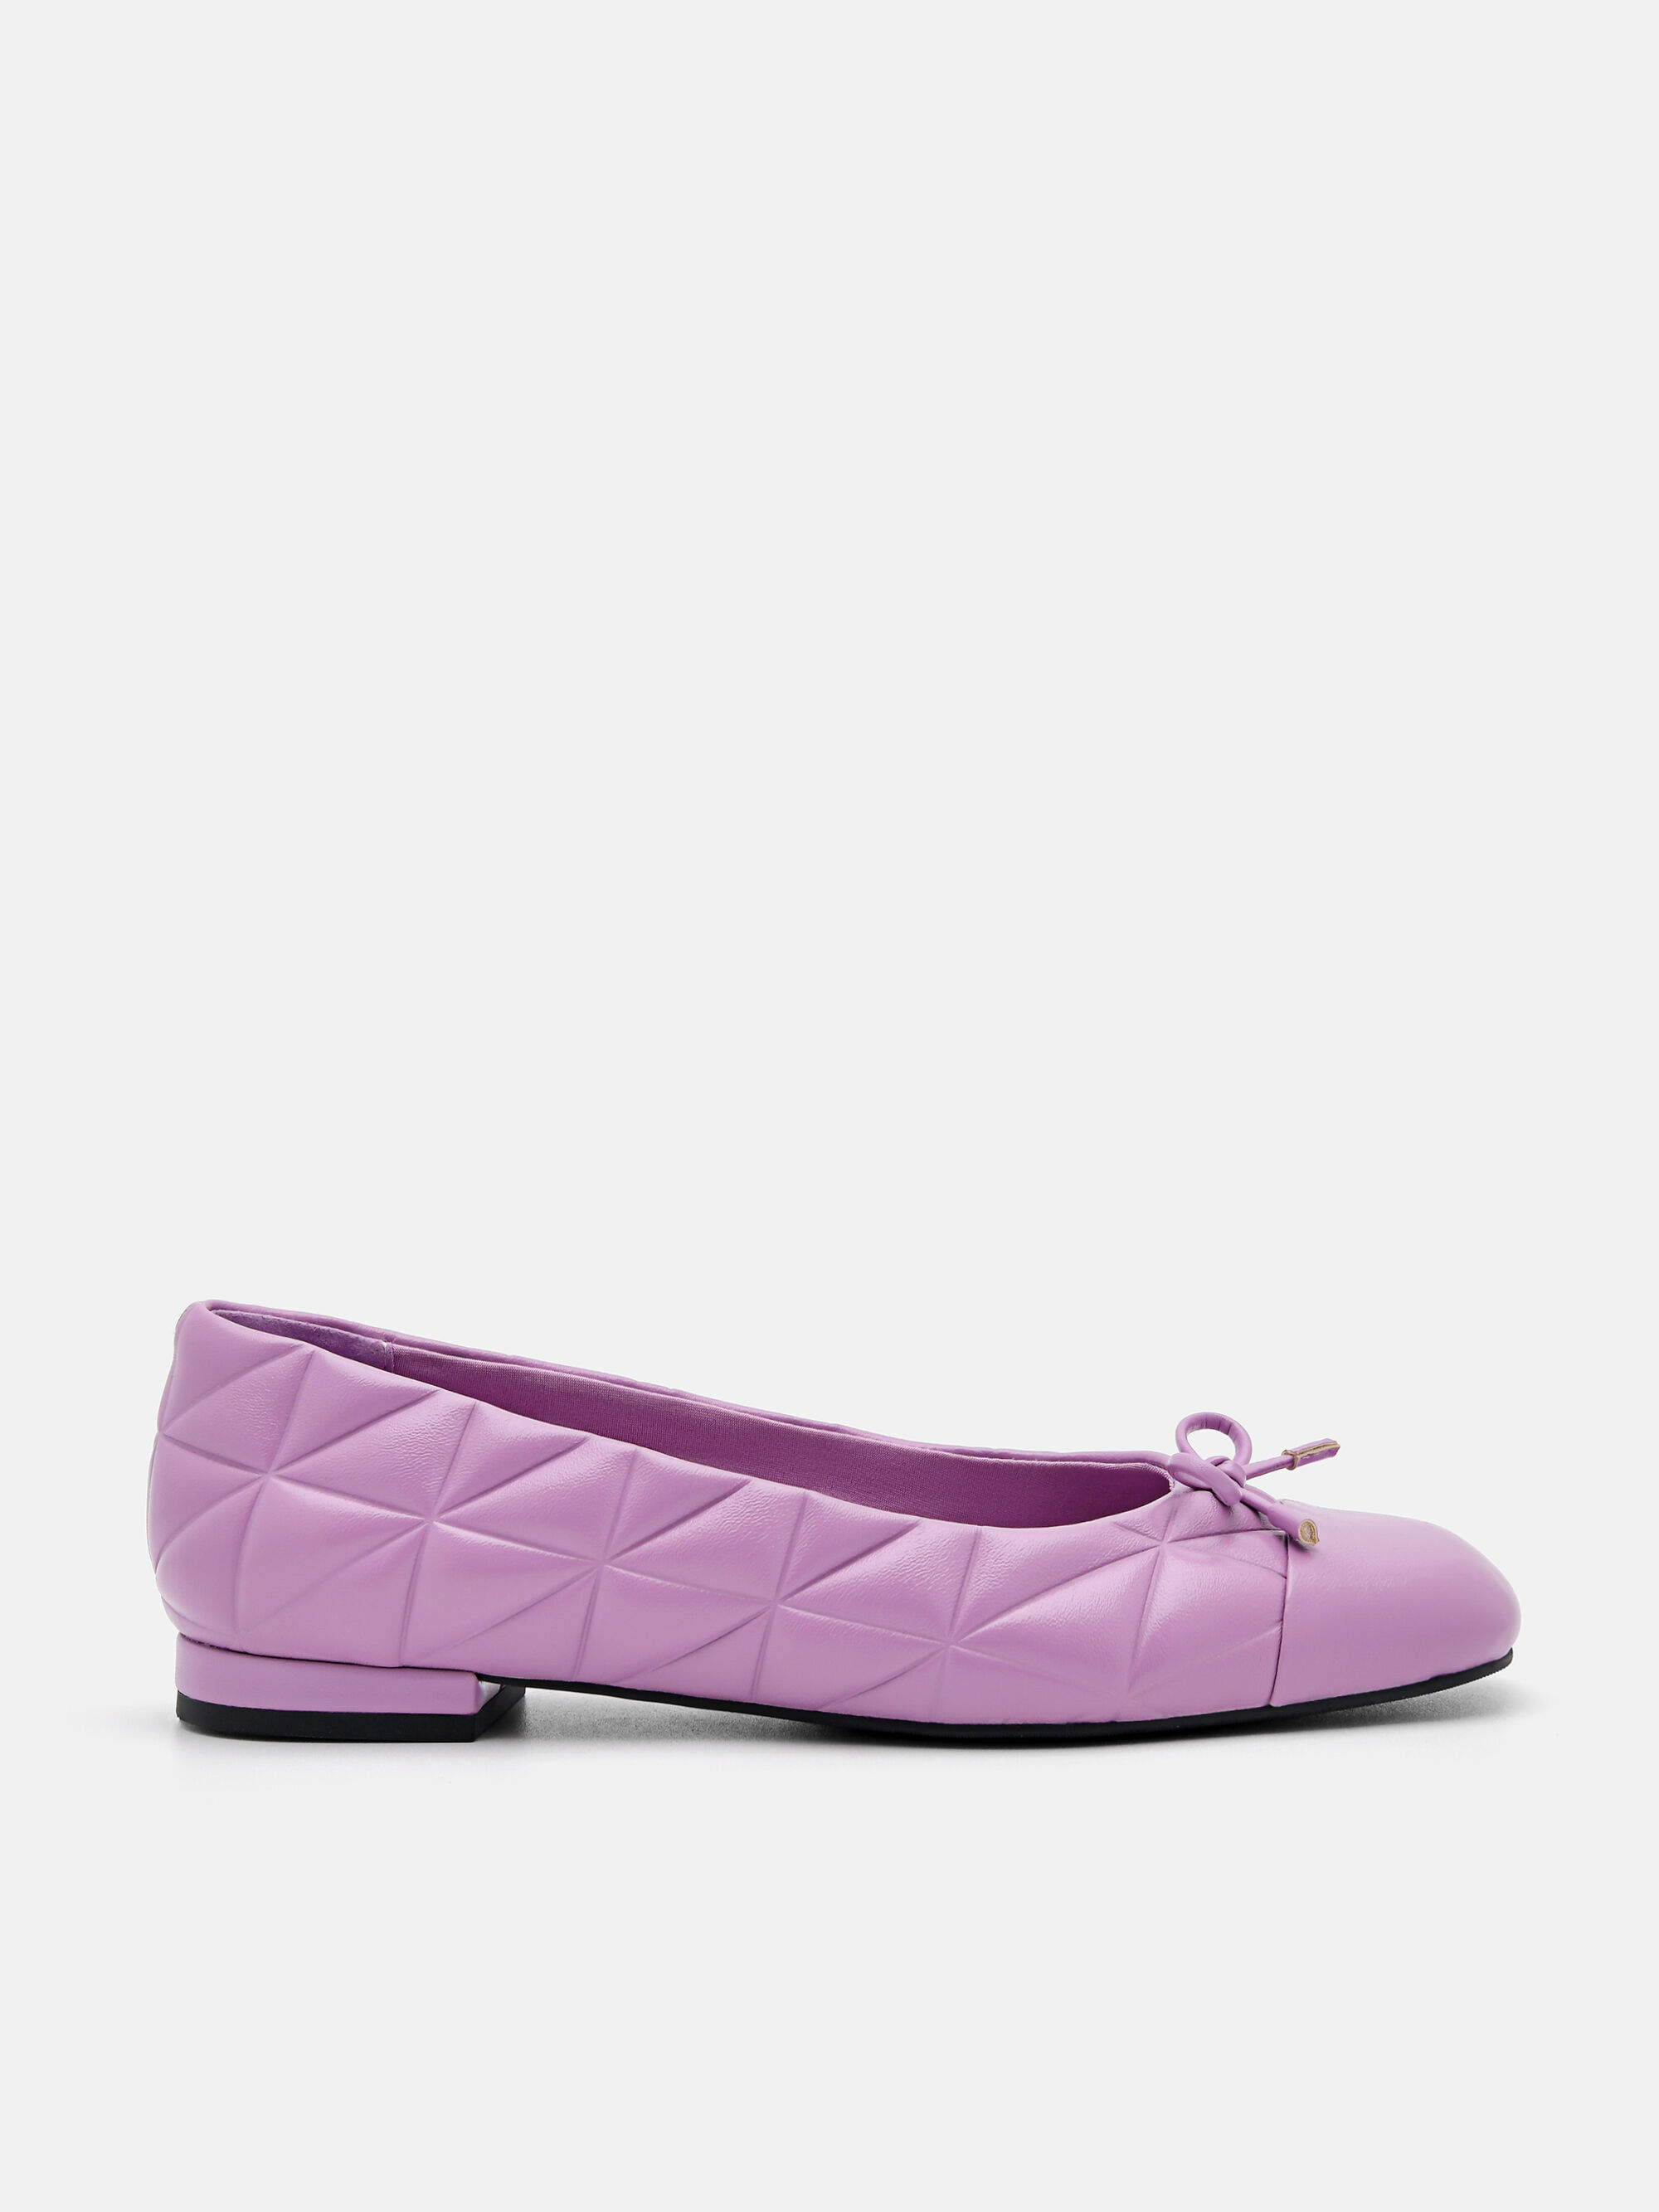 Kayla Leather Ballerina Flats in Pixel, Purple